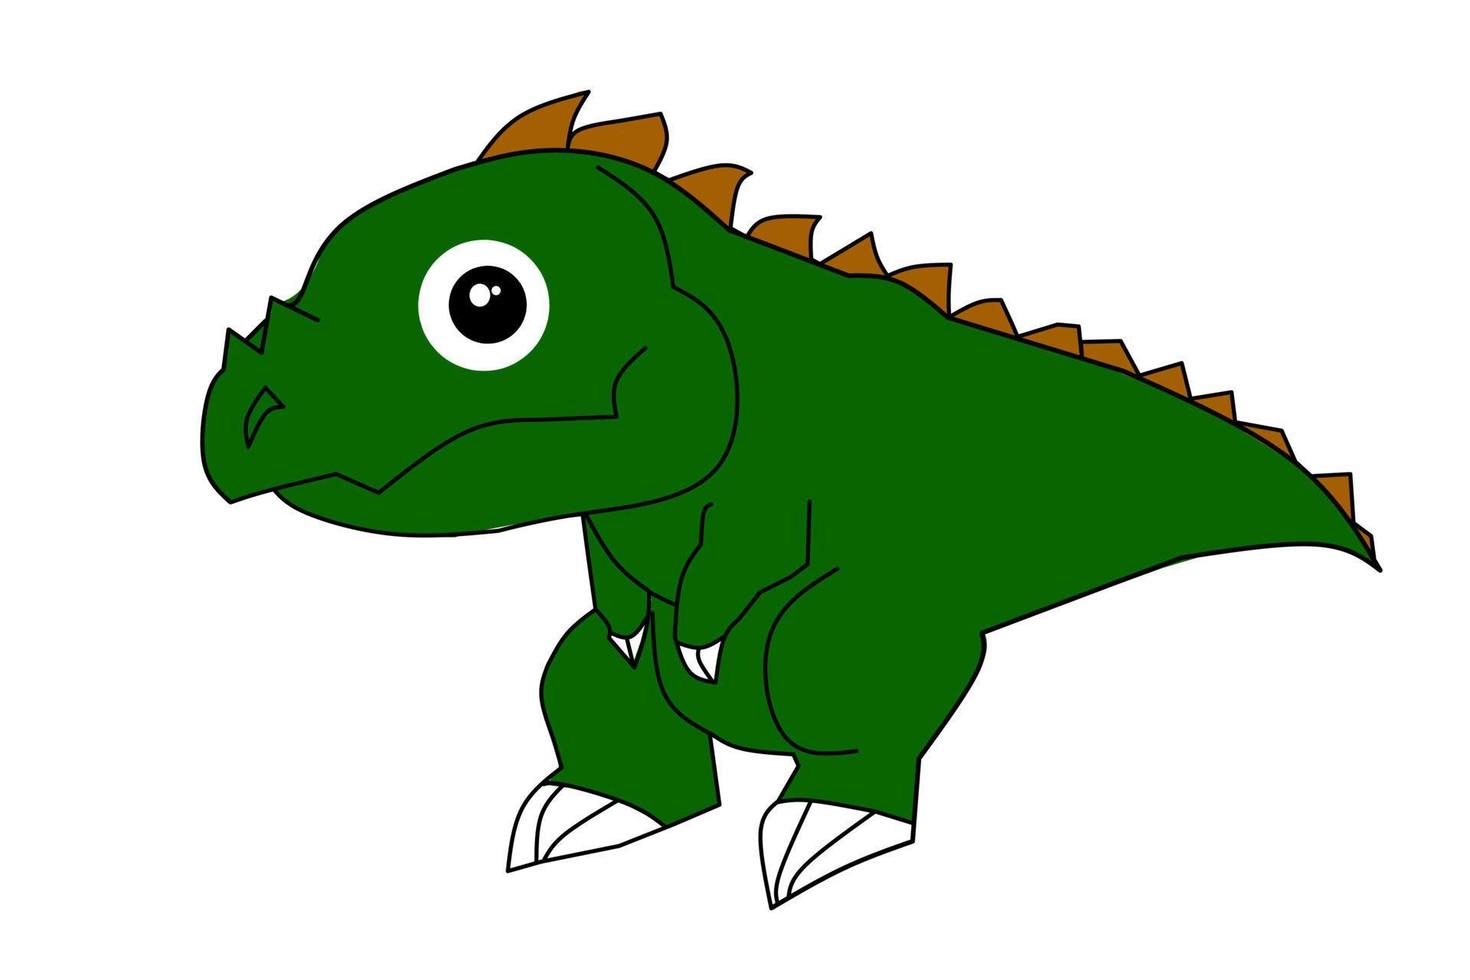 Megalosaurus Dinosaur With white background elements. Vector illustration.